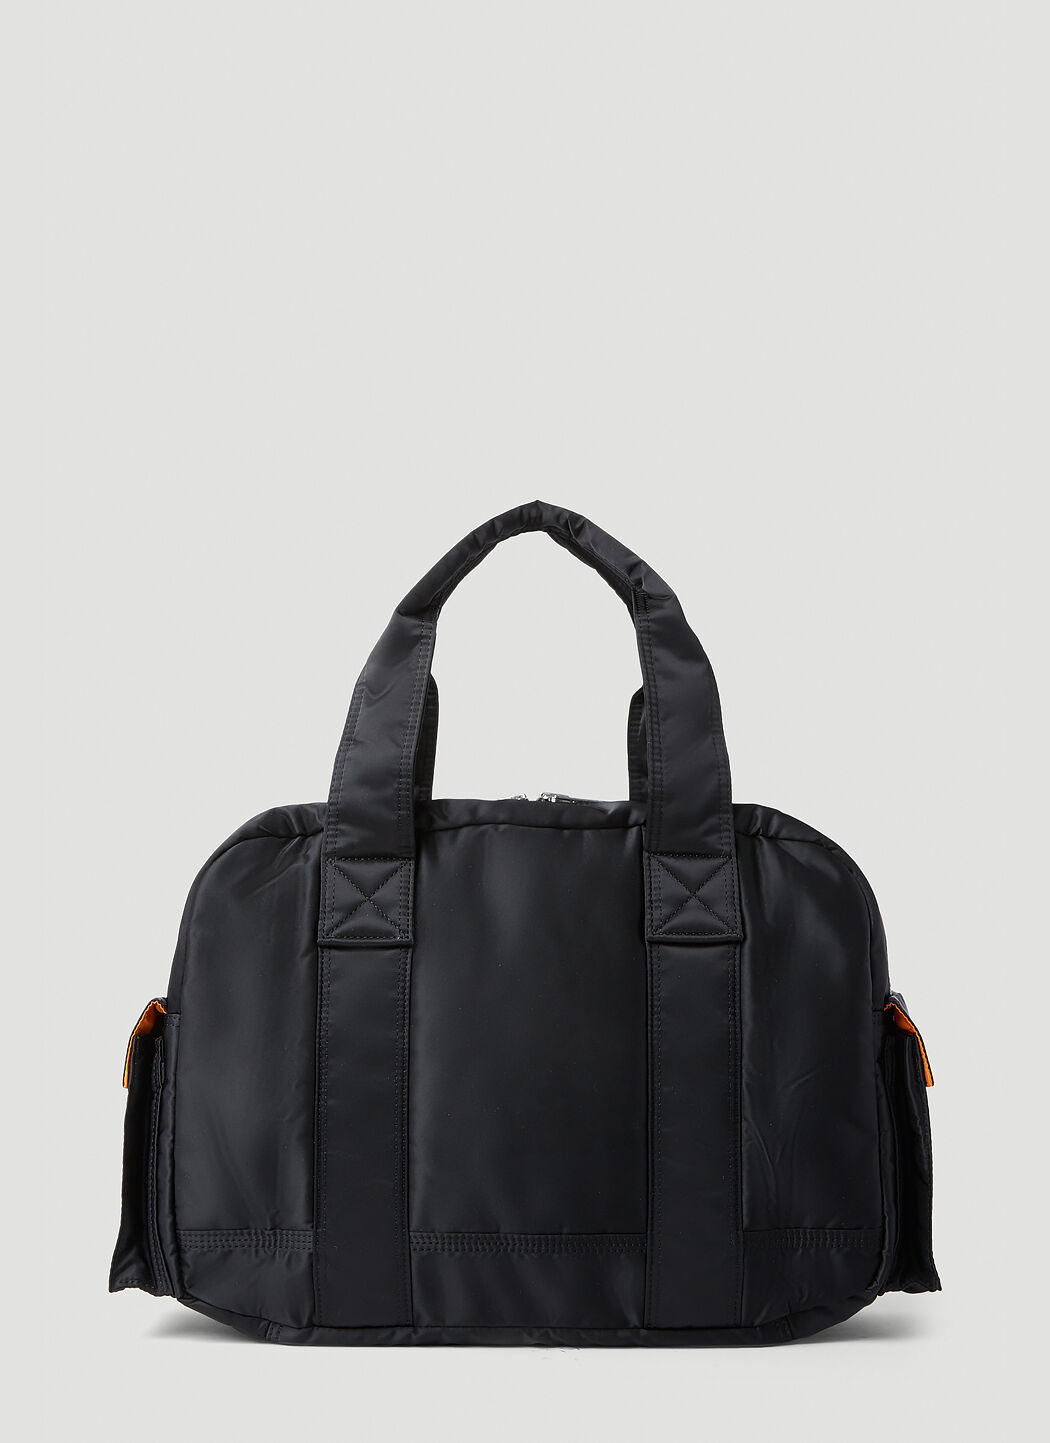 Porter-Yoshida & Co Tanker Duffle Bag in Black | LN-CC®